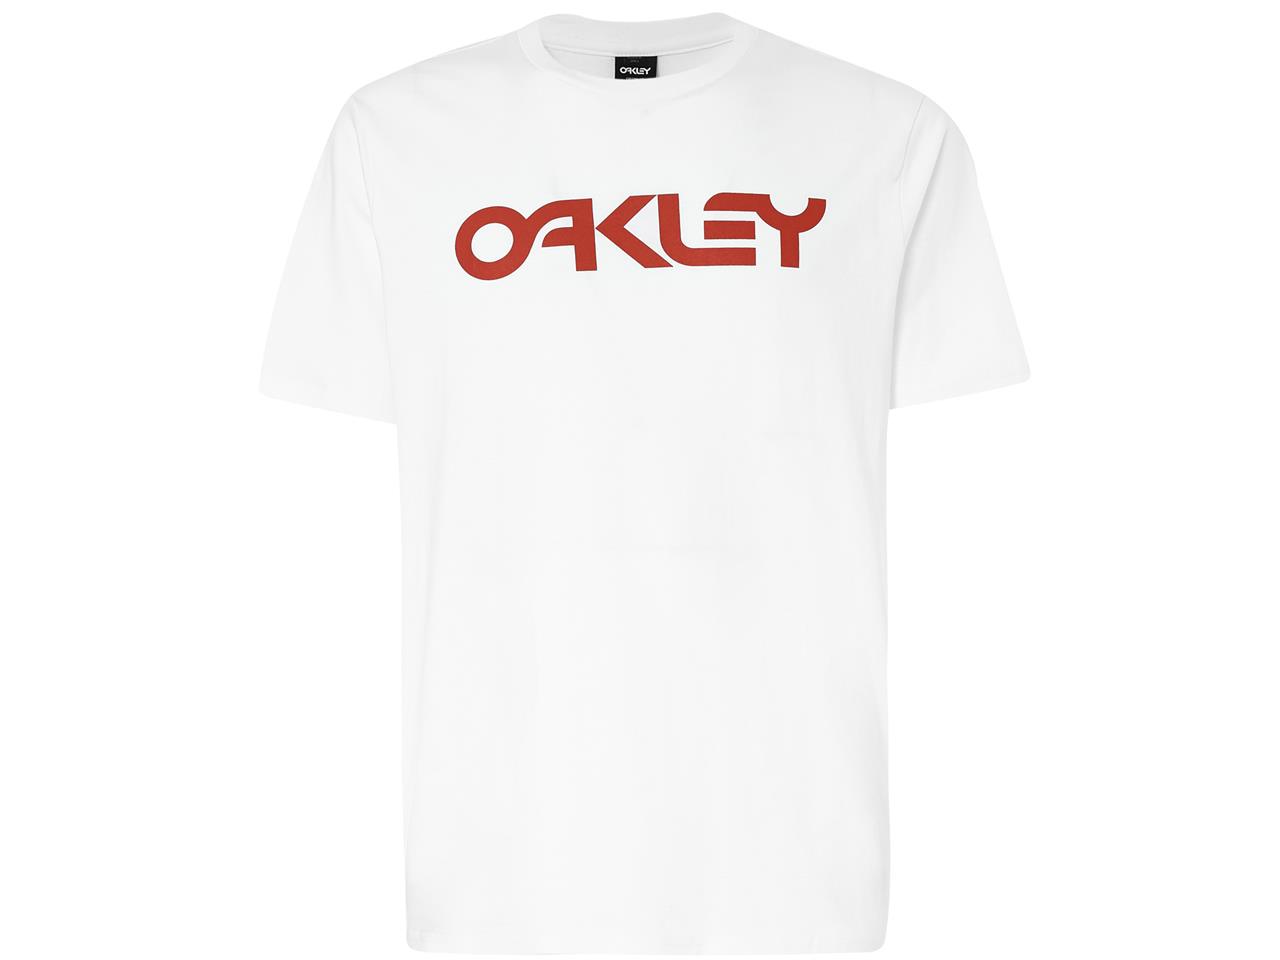 T-Shirt marque Oakley Mark II couleur blanc